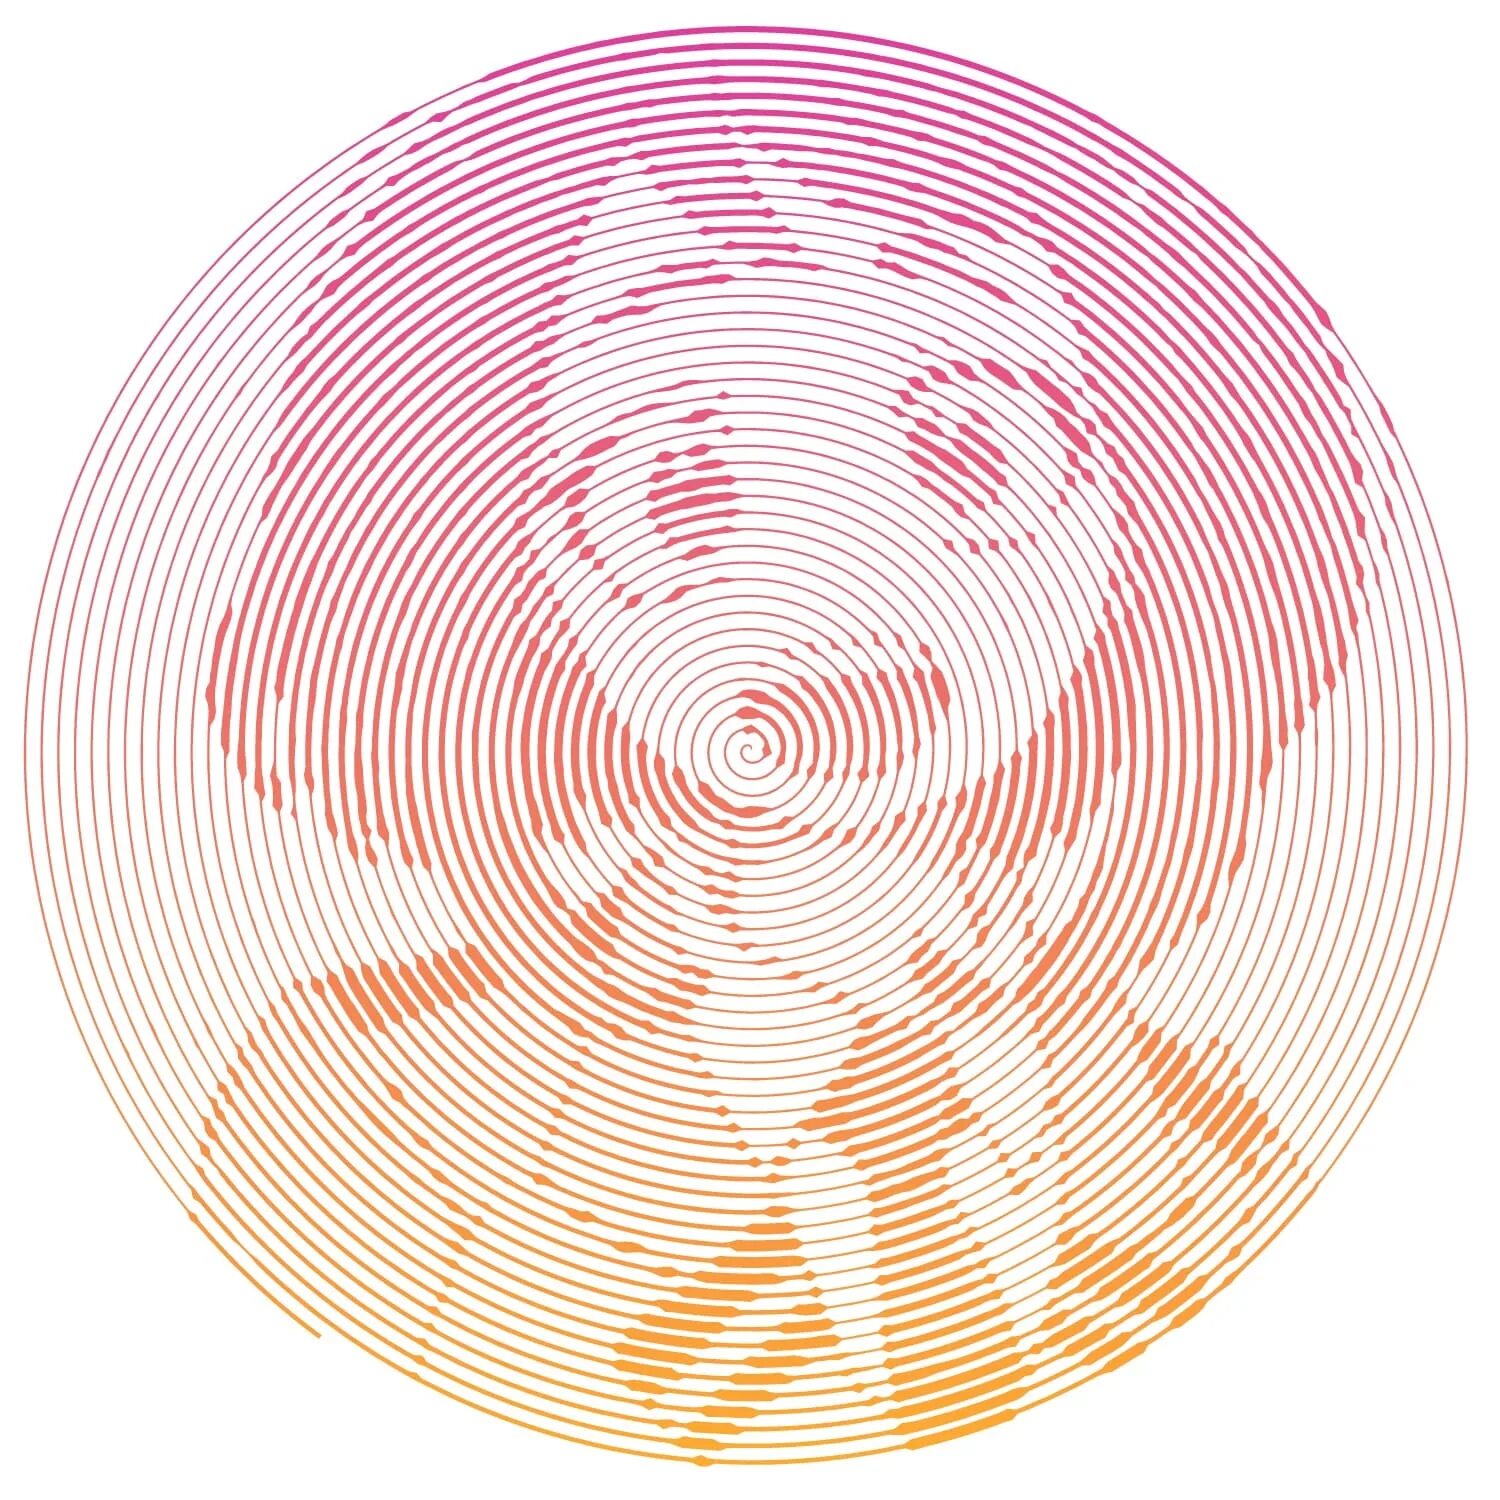 Anime spiral #4